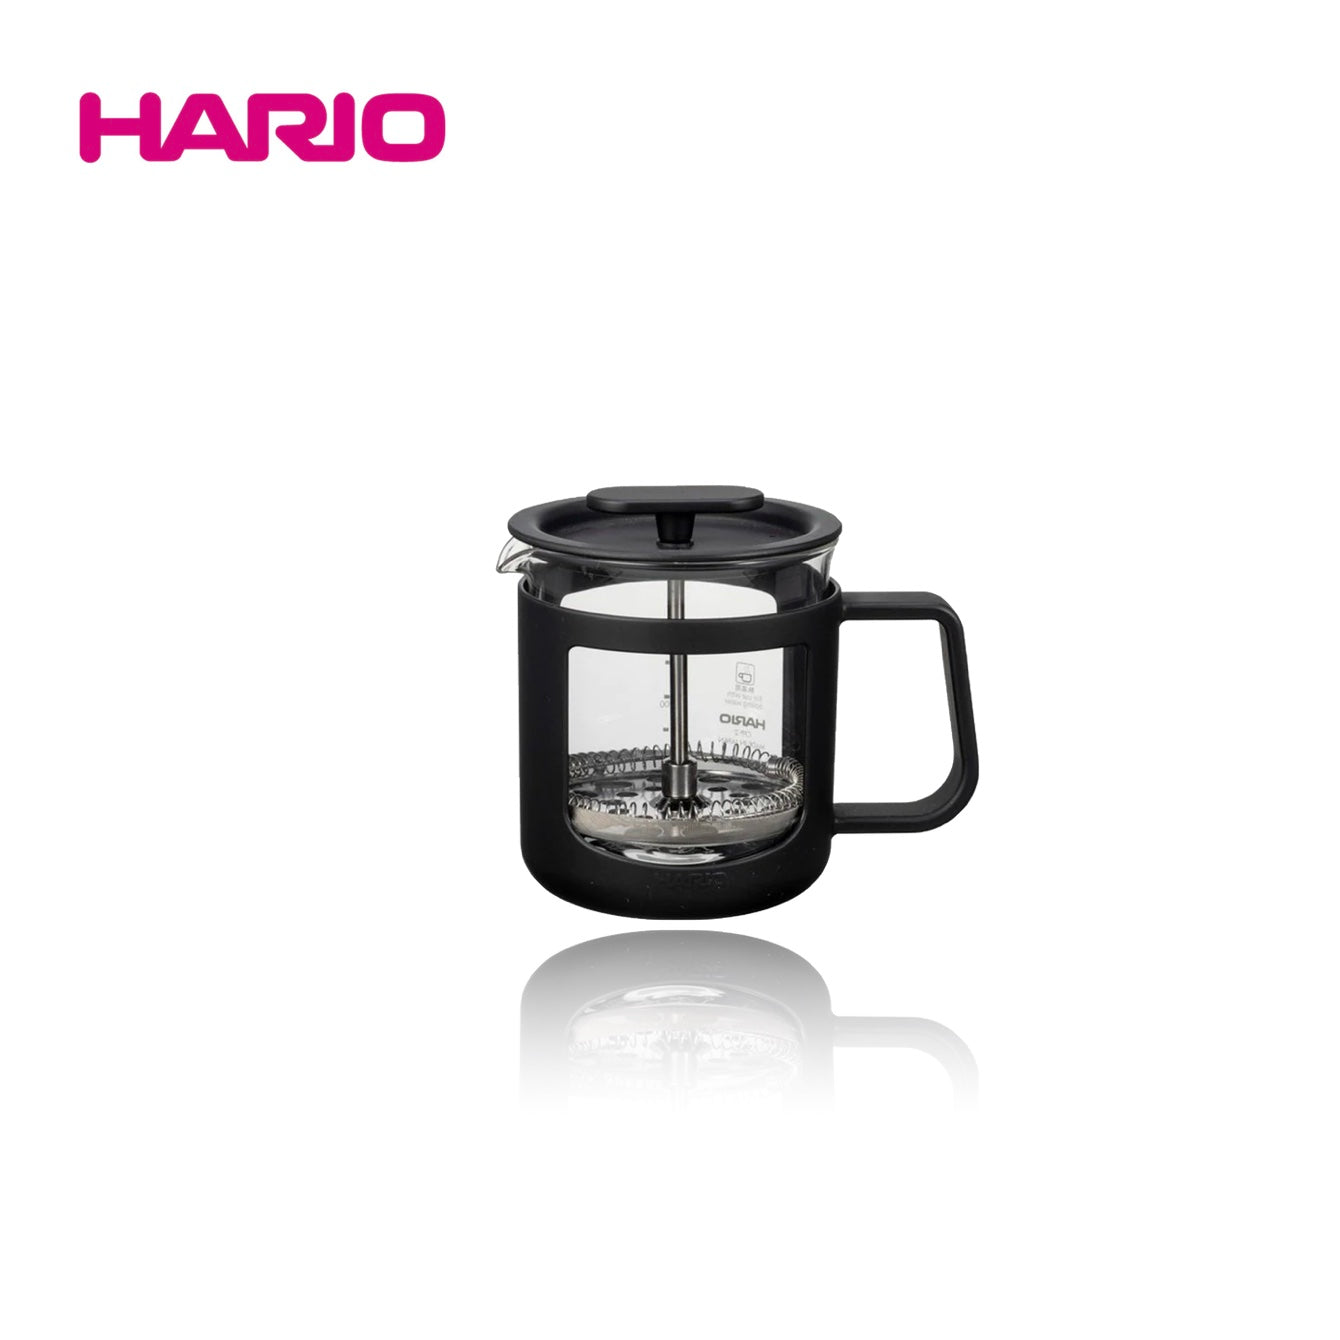 Hario Tea and Coffee Press 300ml